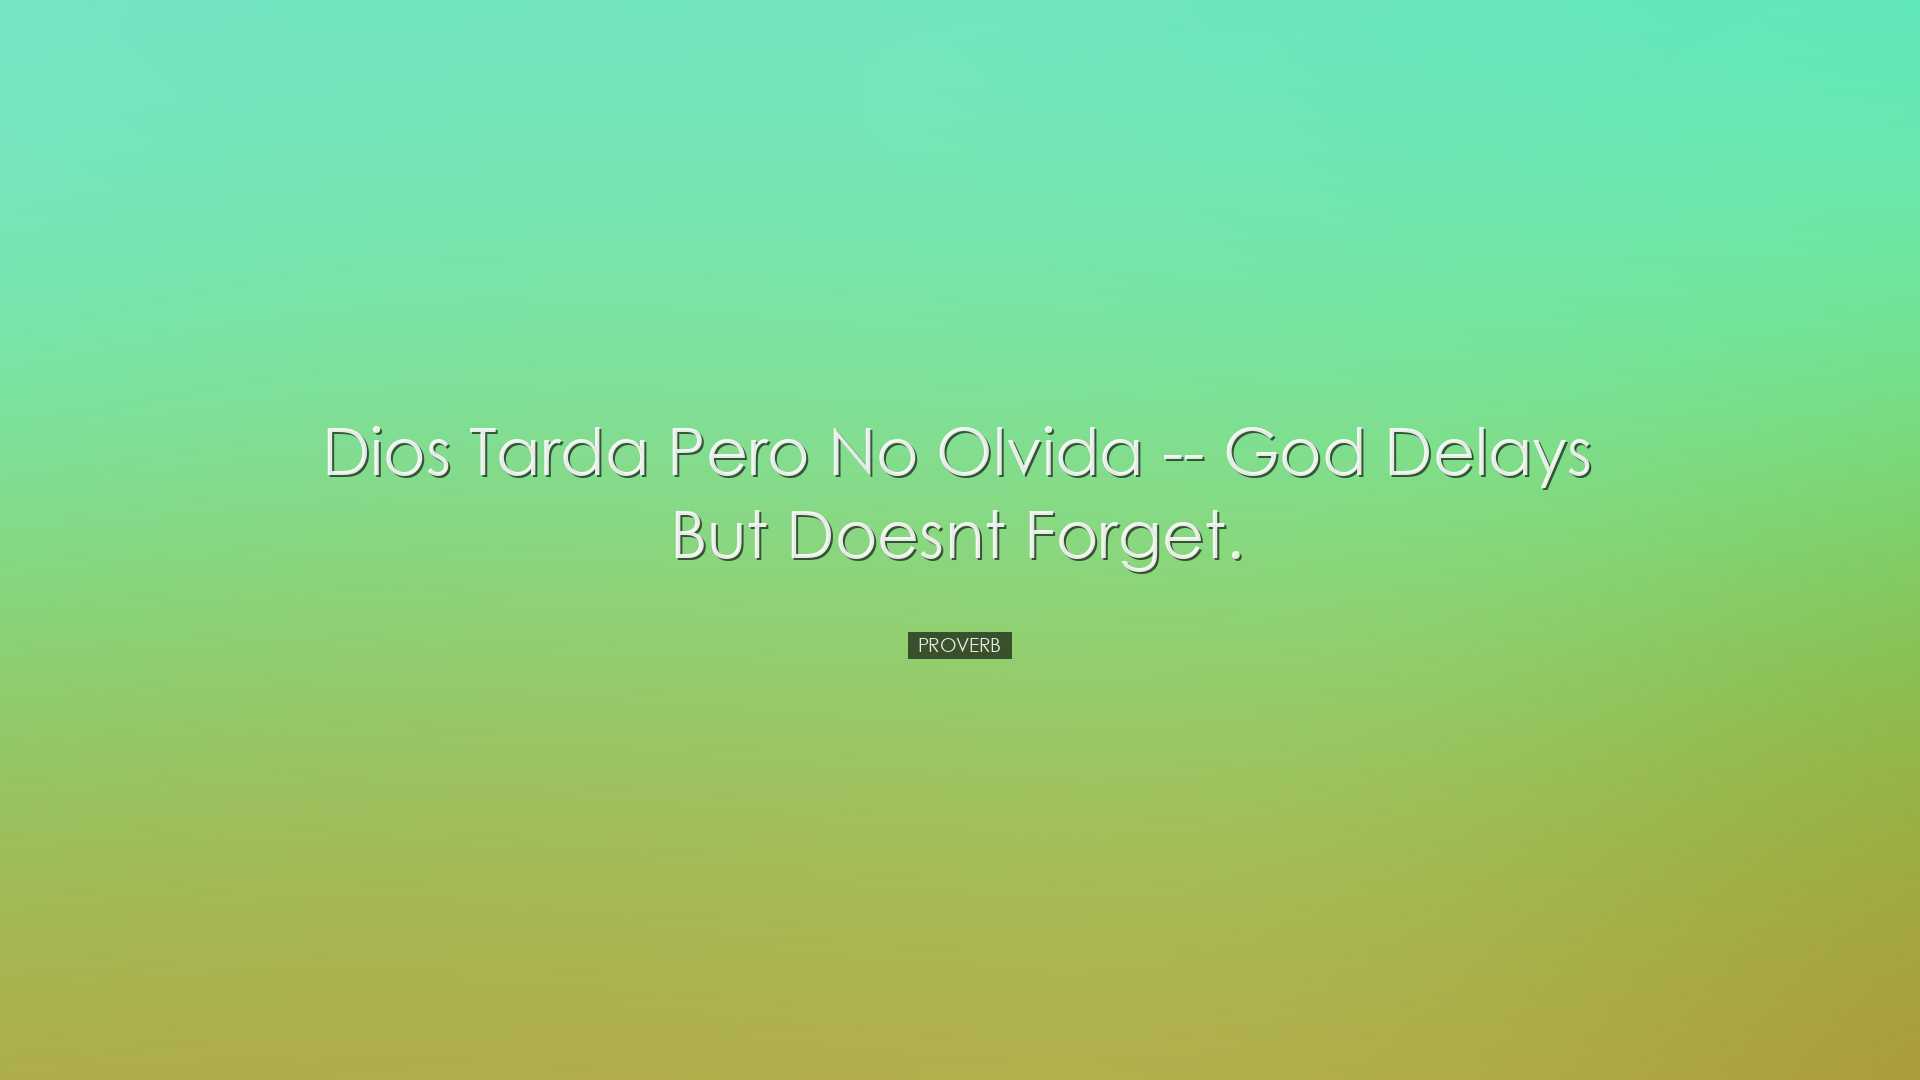 Dios tarda pero no olvida -- God delays but doesnt forget. - Prove